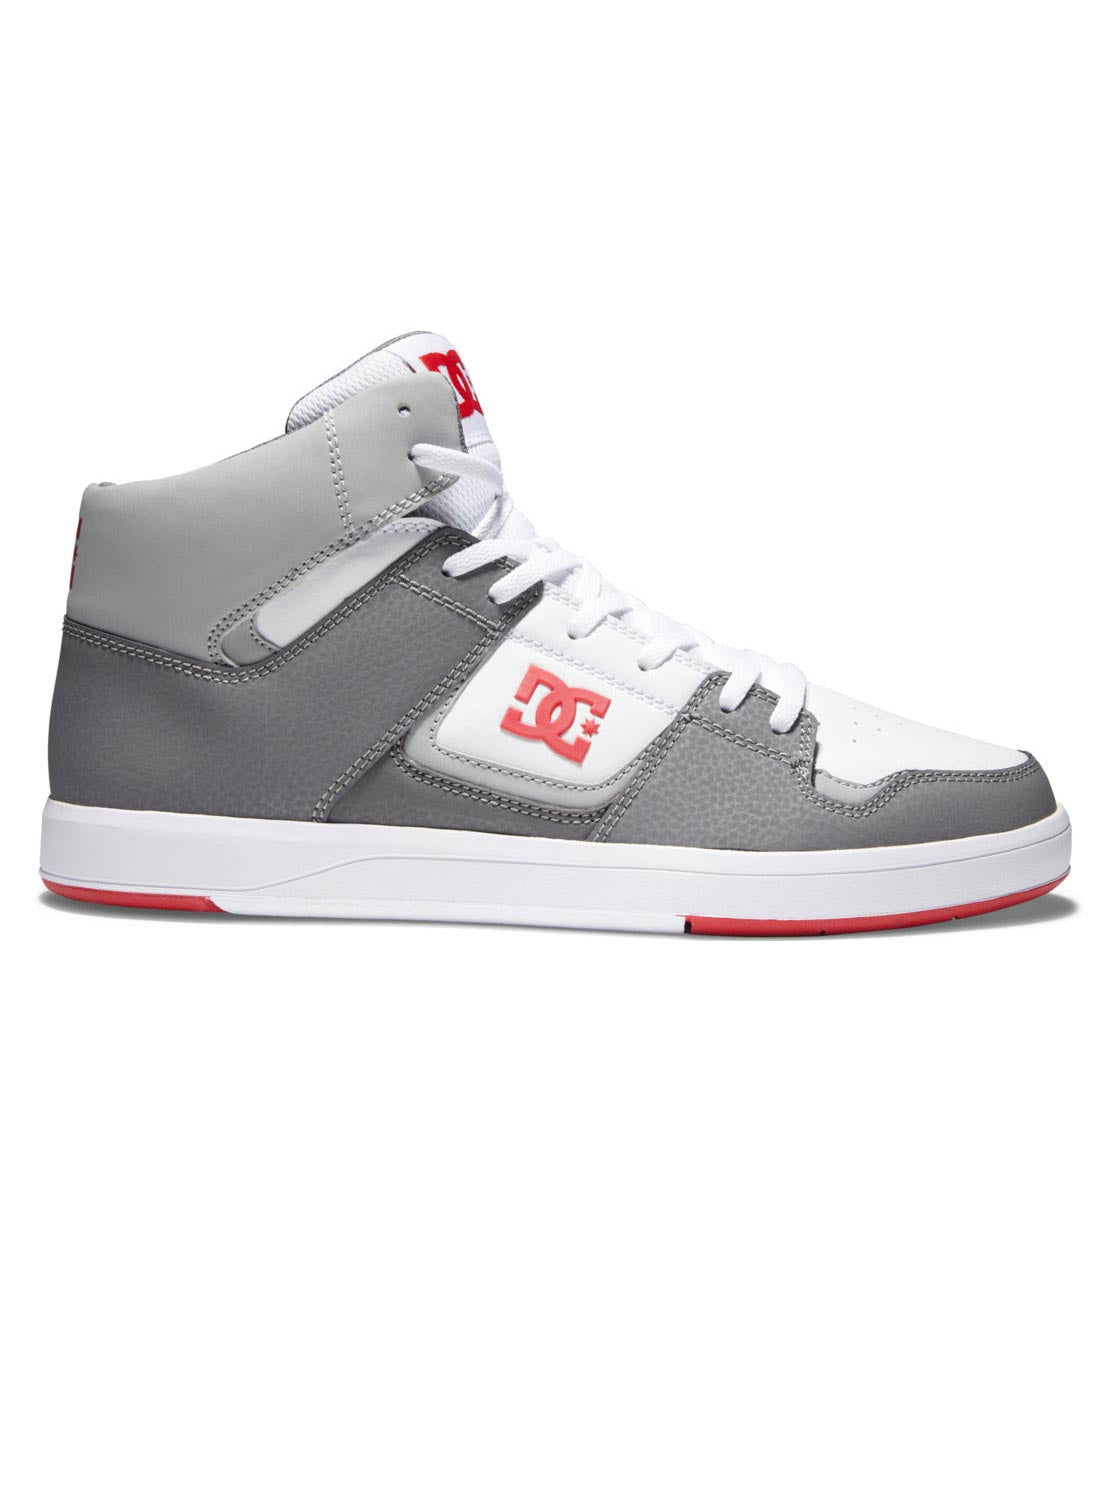 Dc Shoes Cure Hi Top White/grey/red | surfdevils.com